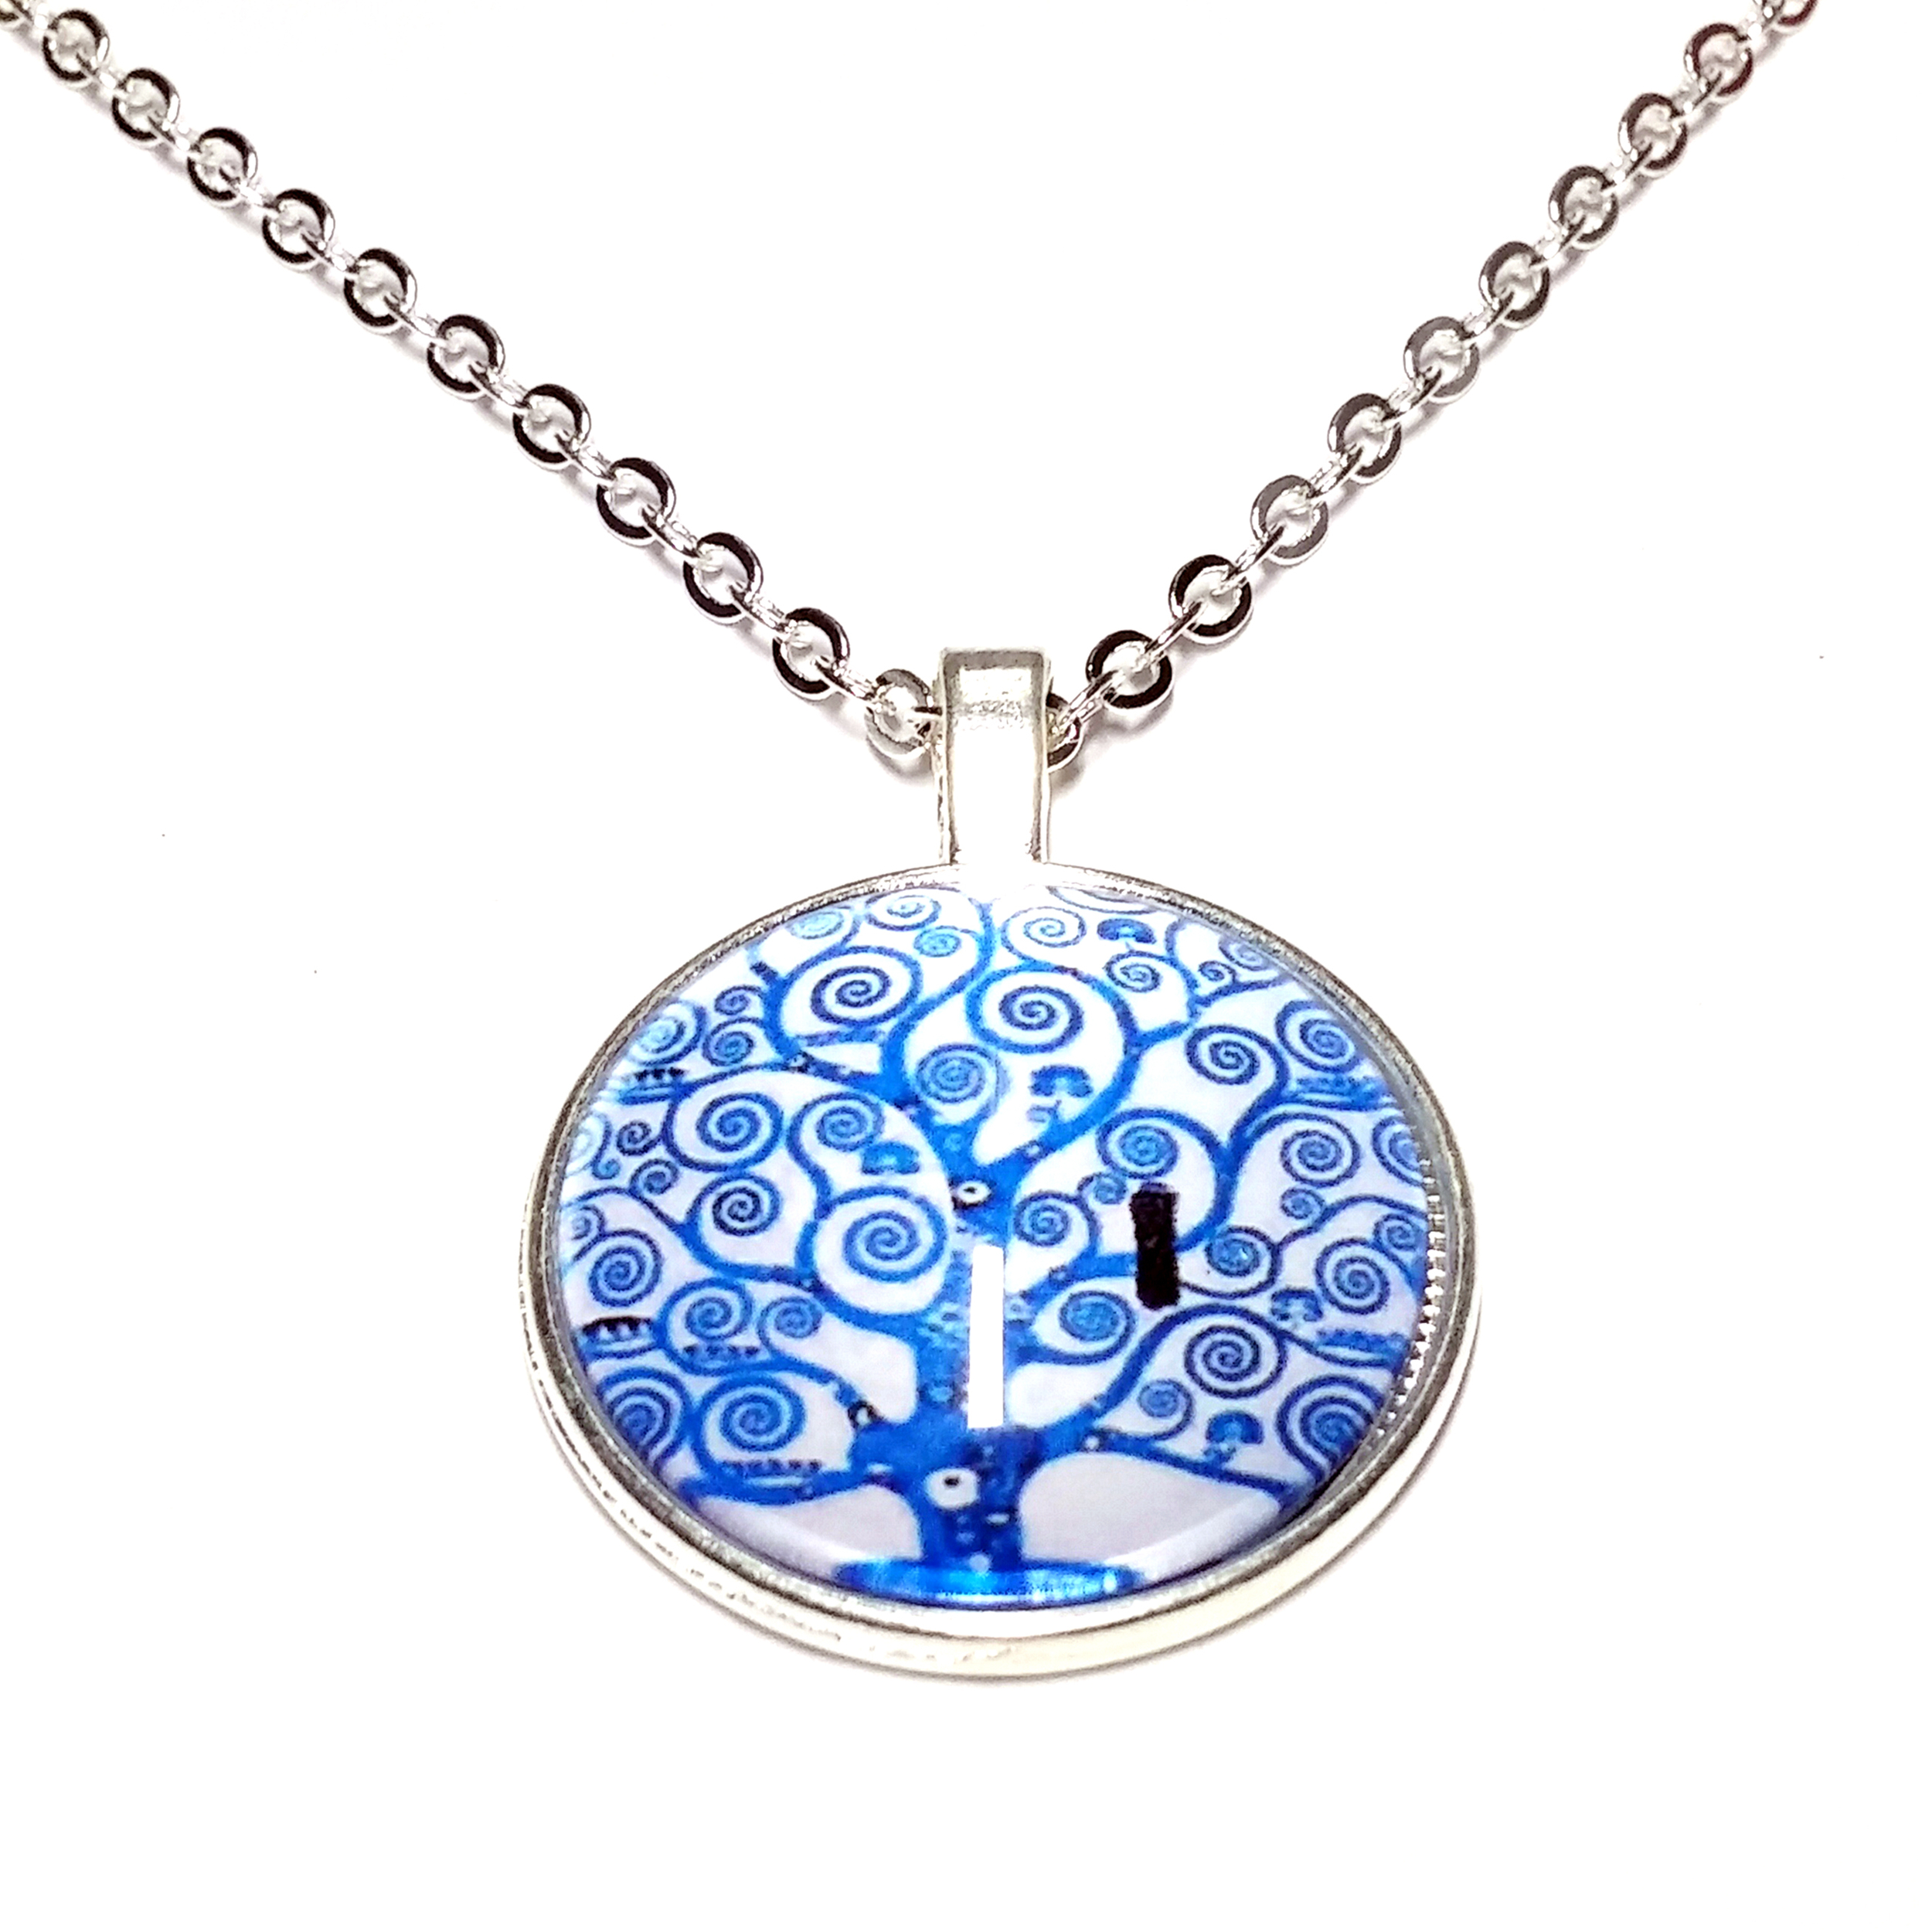 Collier pendentif métal arbre de vie bleu braches spirales